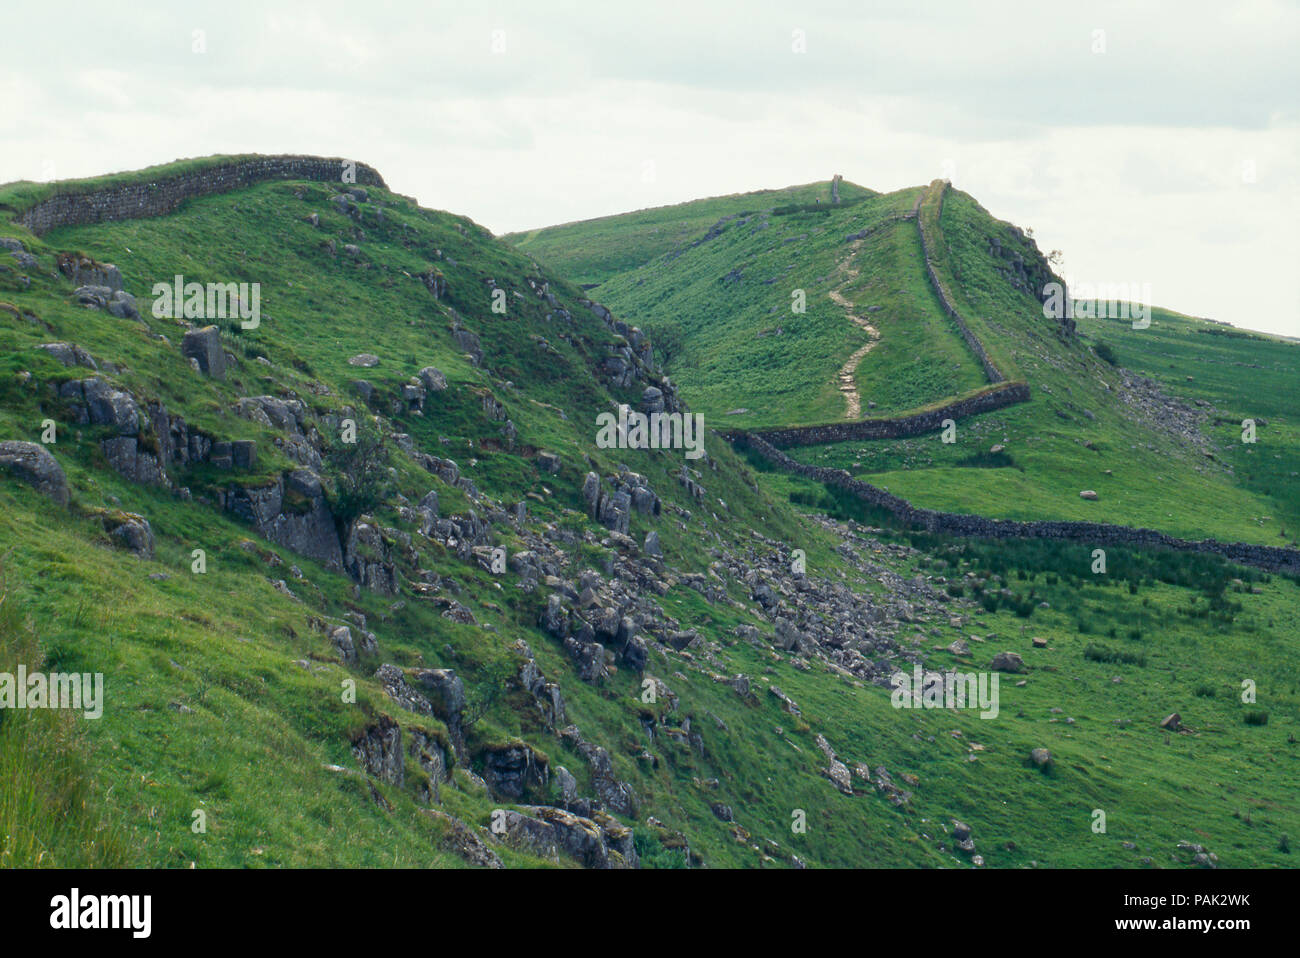 Hadrian's Wall, Roman Empire's border in Northumbria, England, 2nd century AD. Photograph Stock Photo